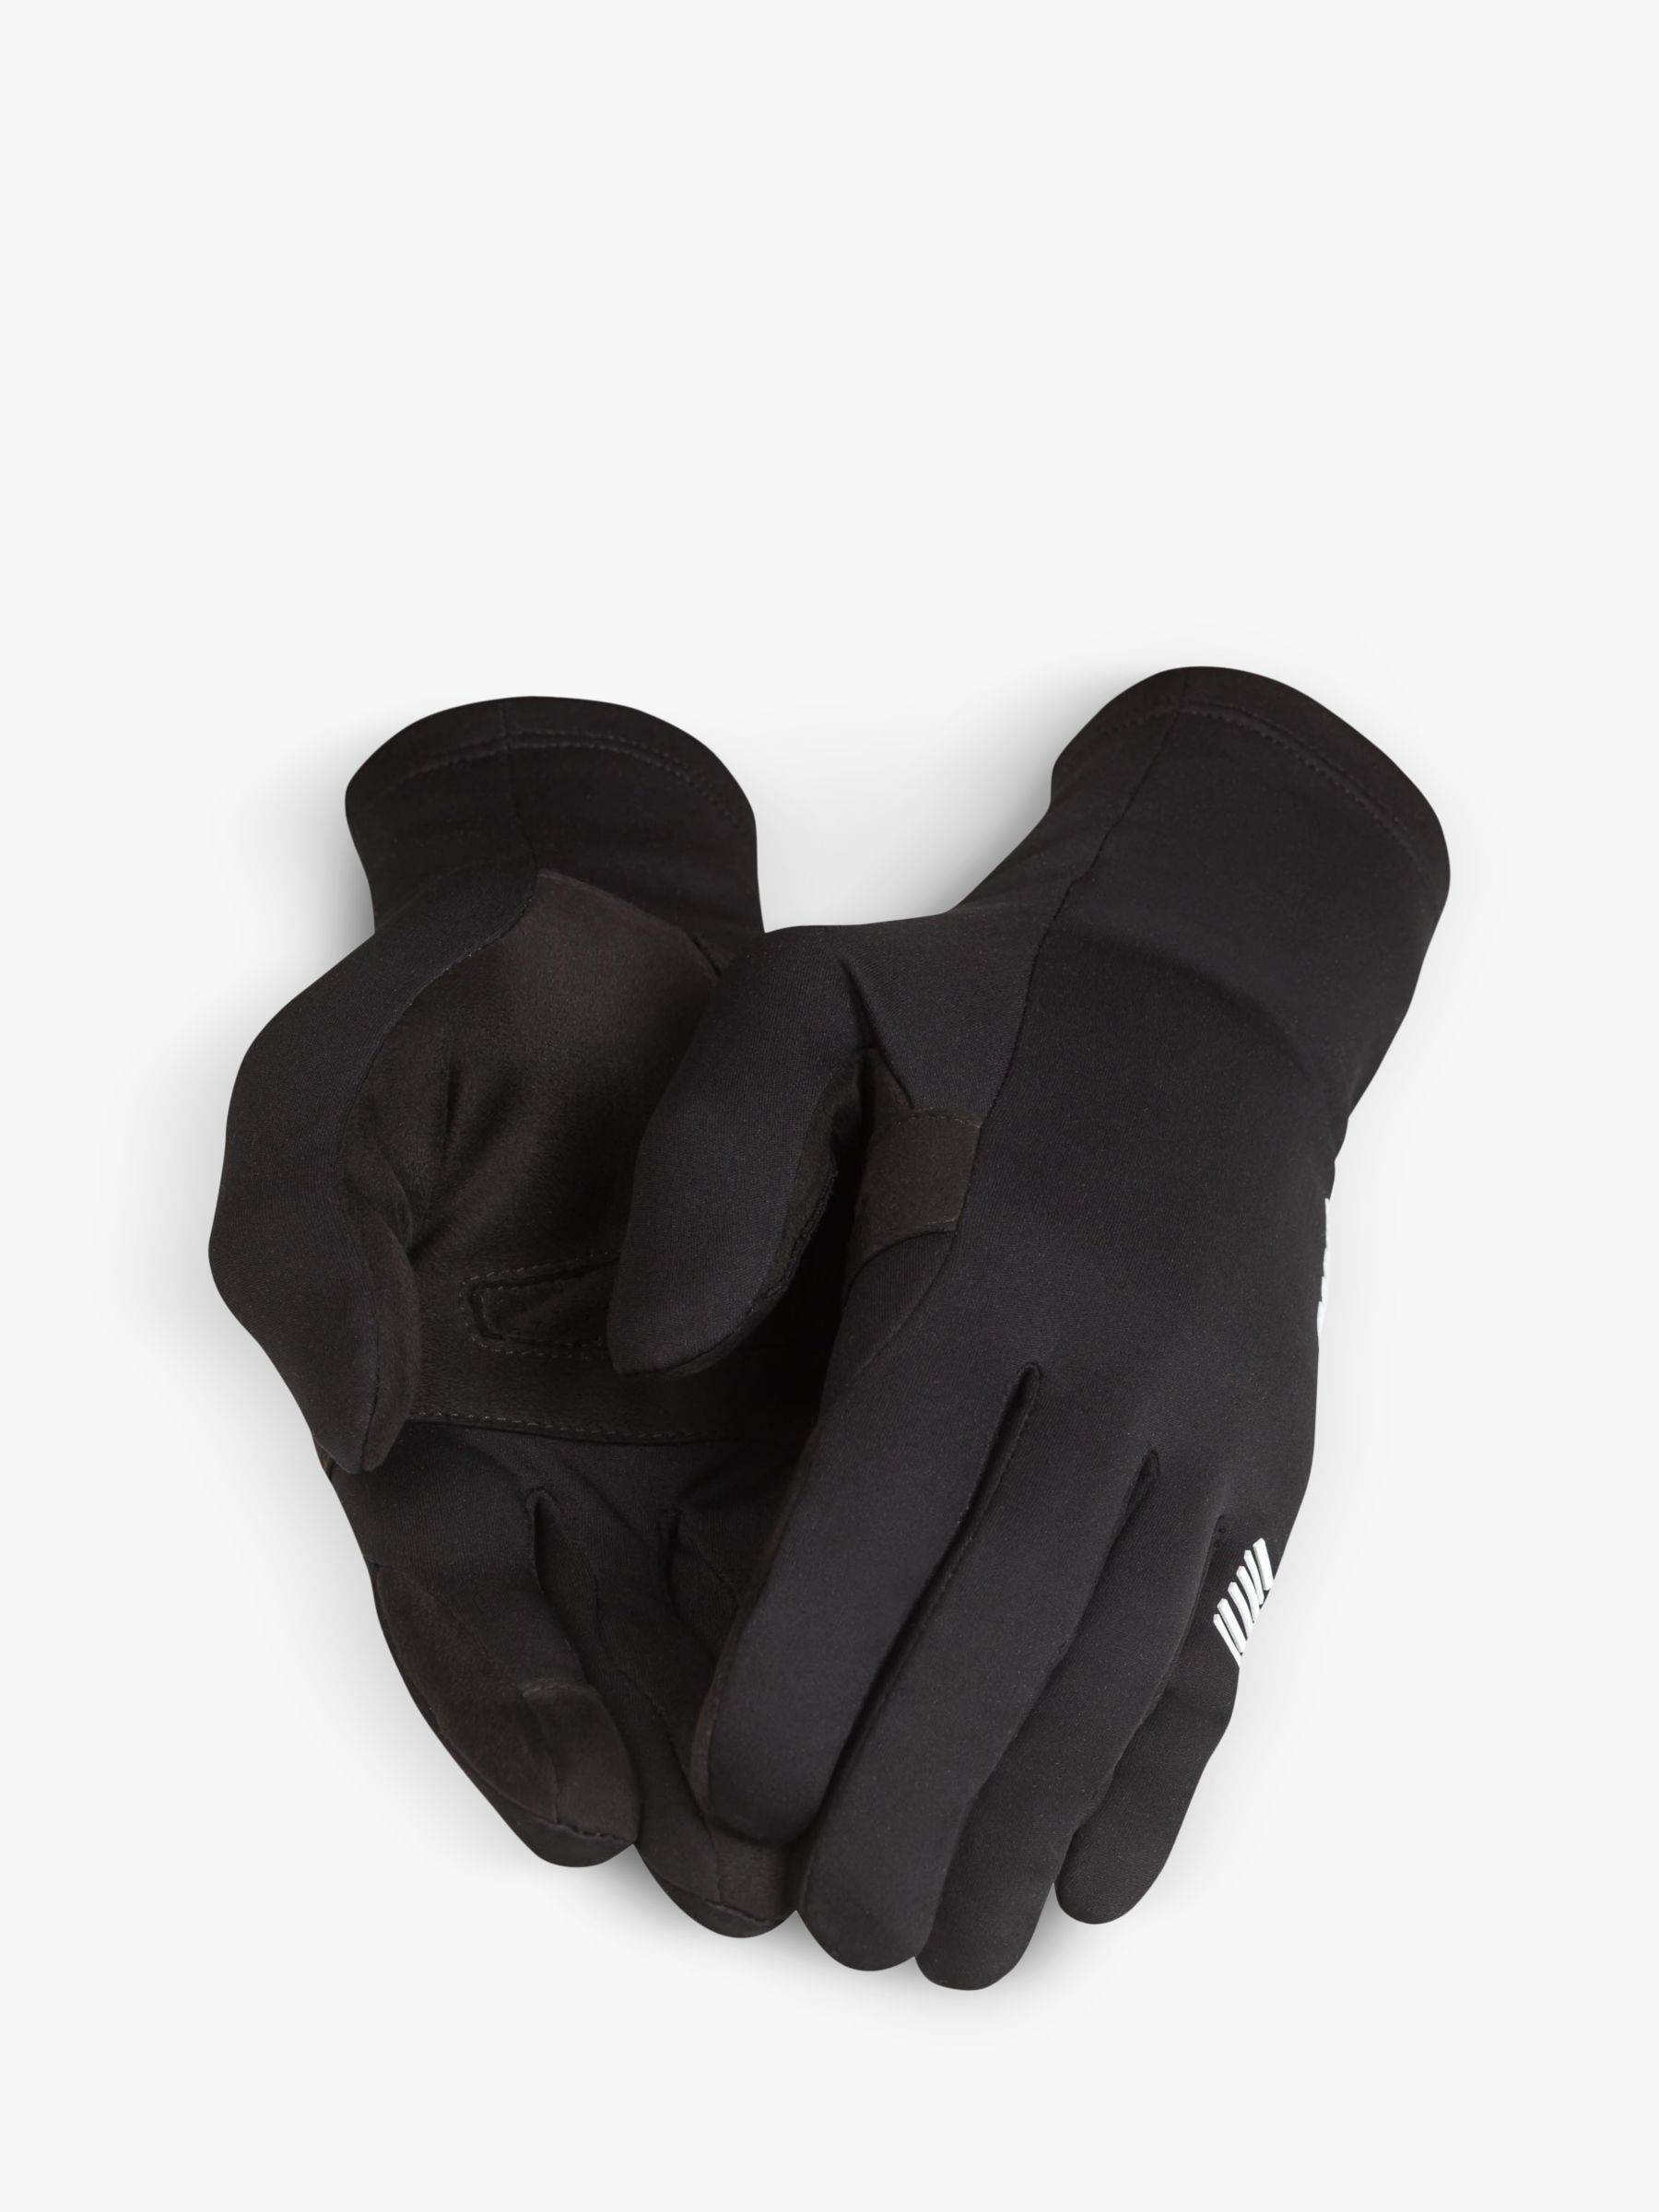 Rapha Pro Team Men's Cycling Gloves, Black, S